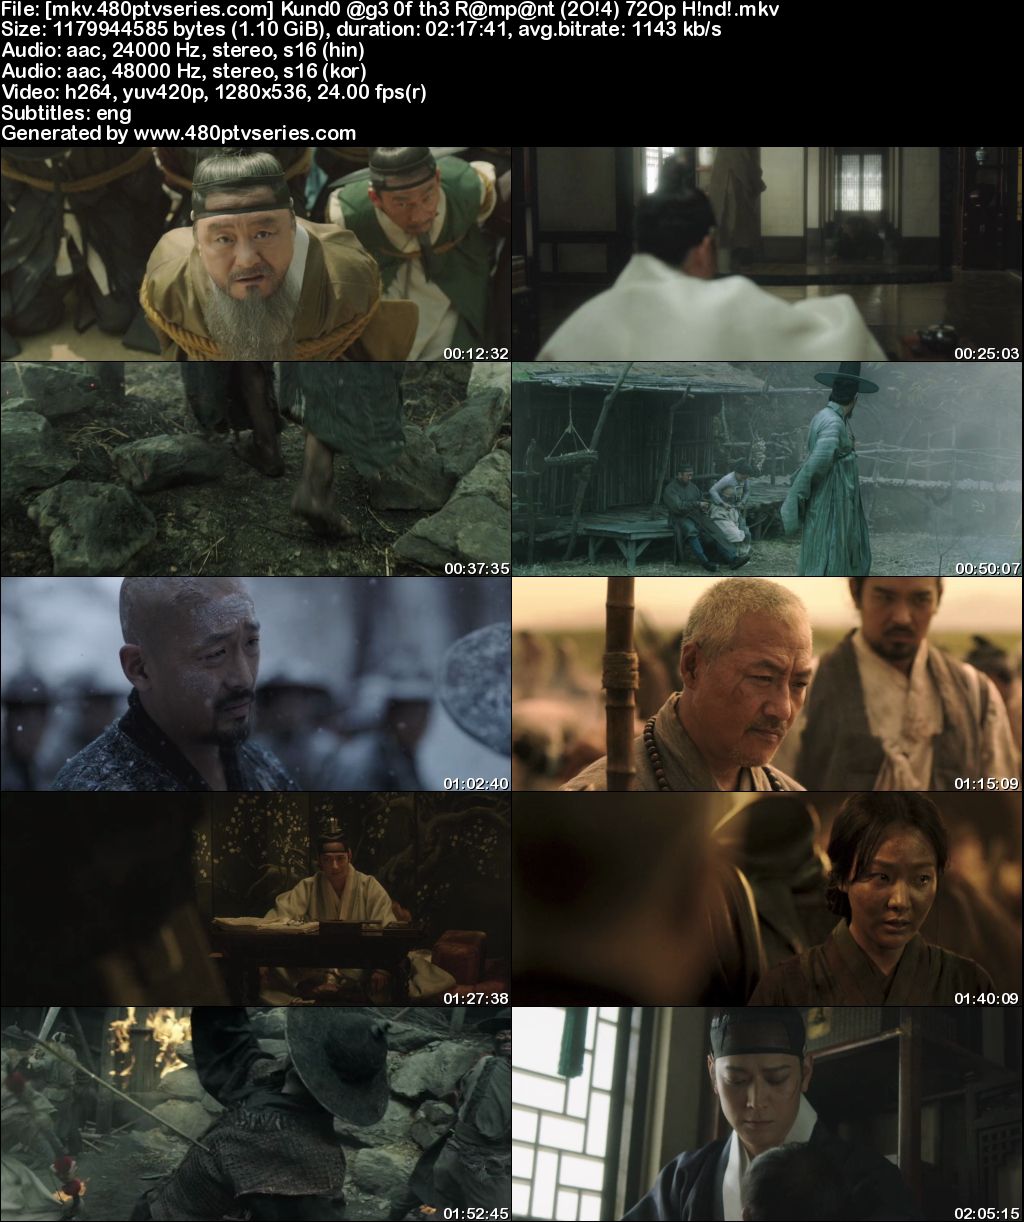 Watch Online Free Kundo: Age of the Rampant (2014) Full Hindi Dual Audio Movie Download 480p 720p Bluray